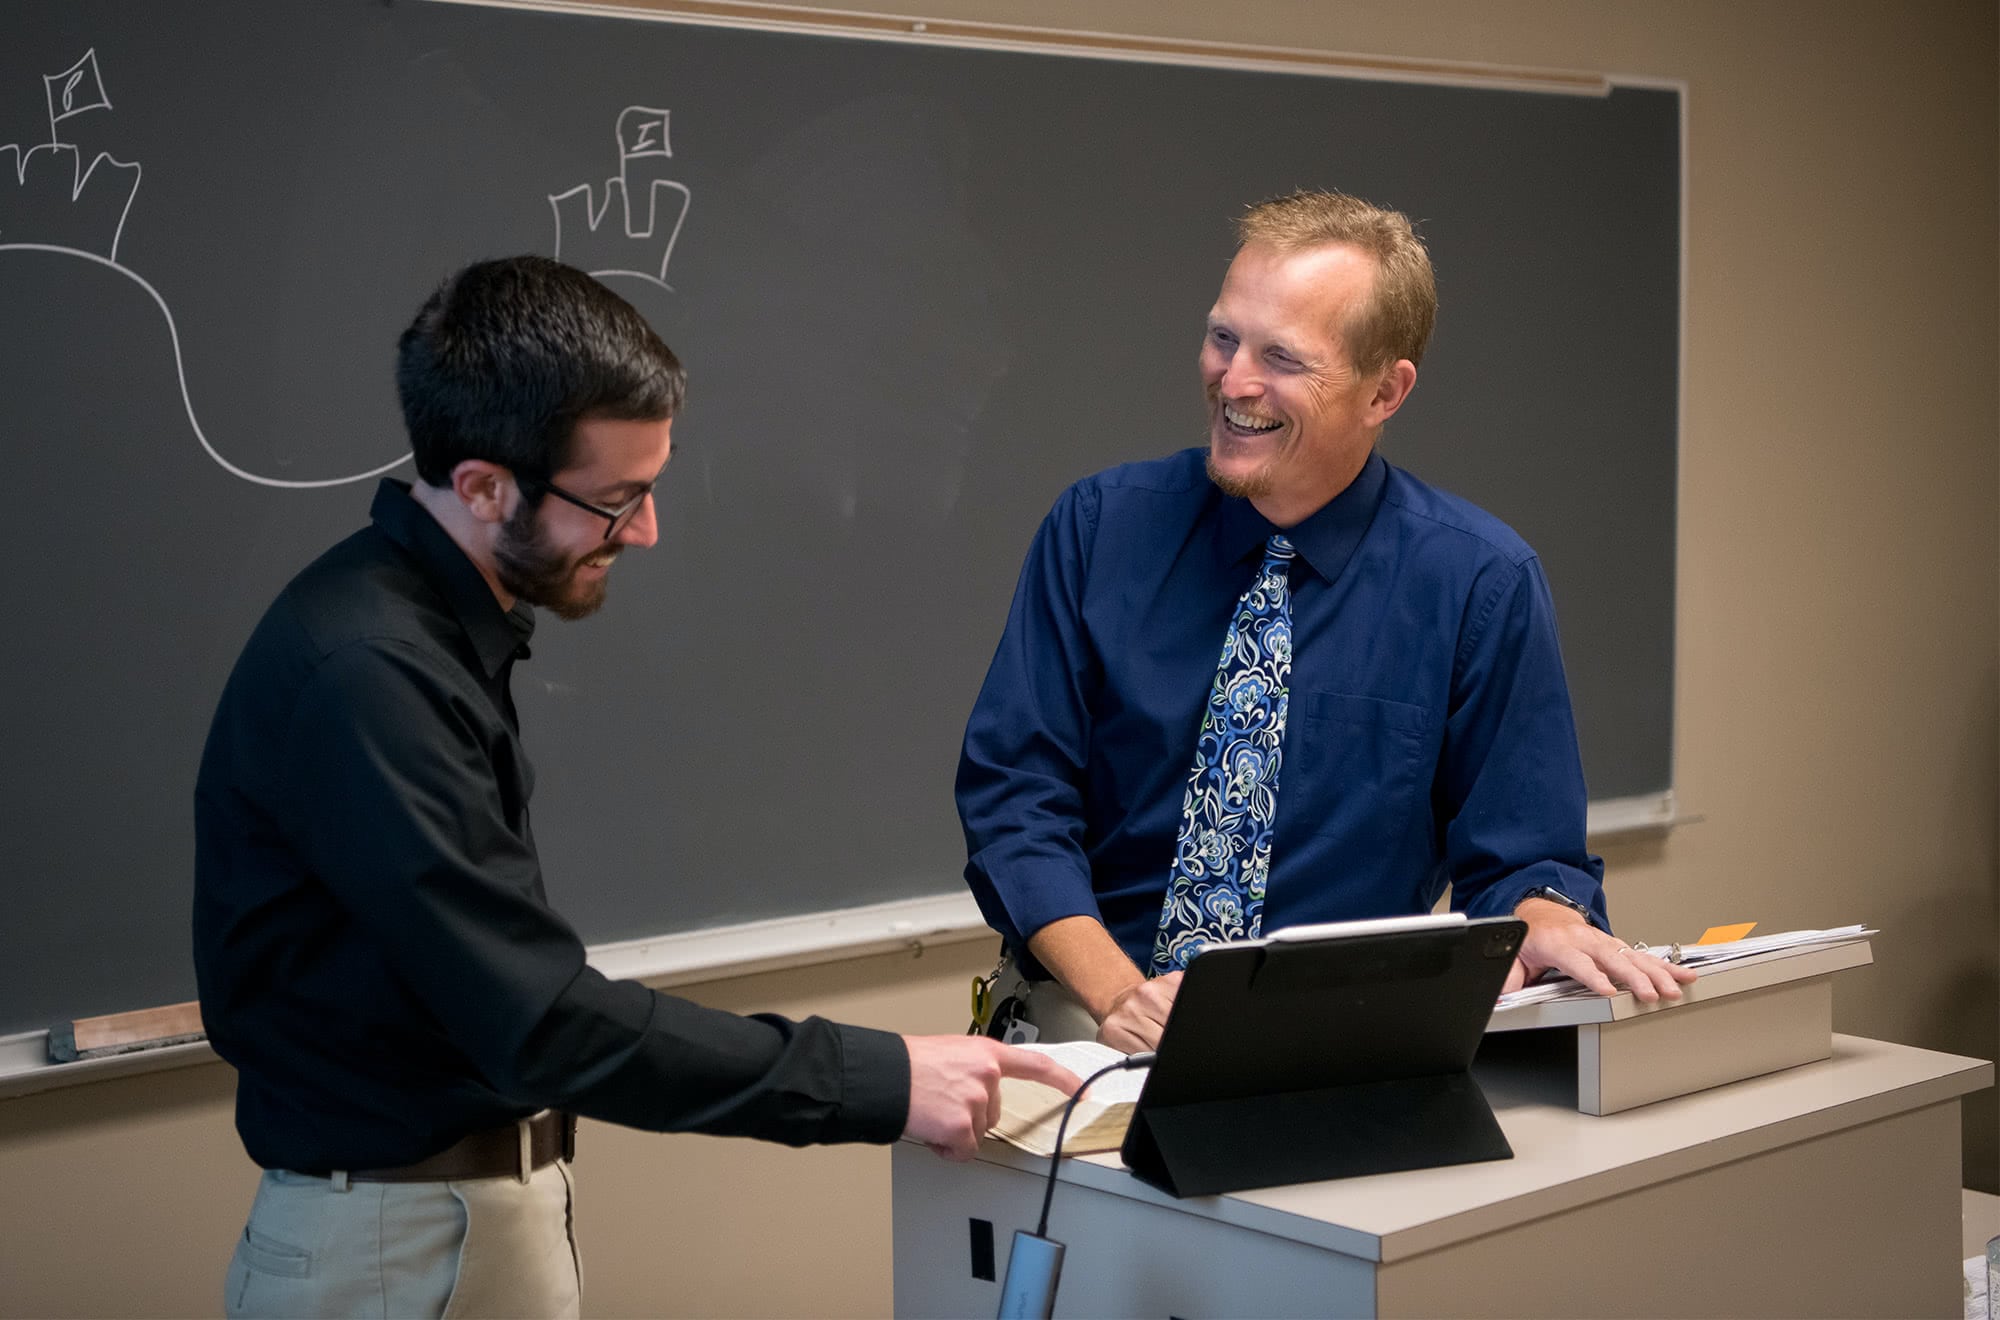 Professor smiling at graduate student.